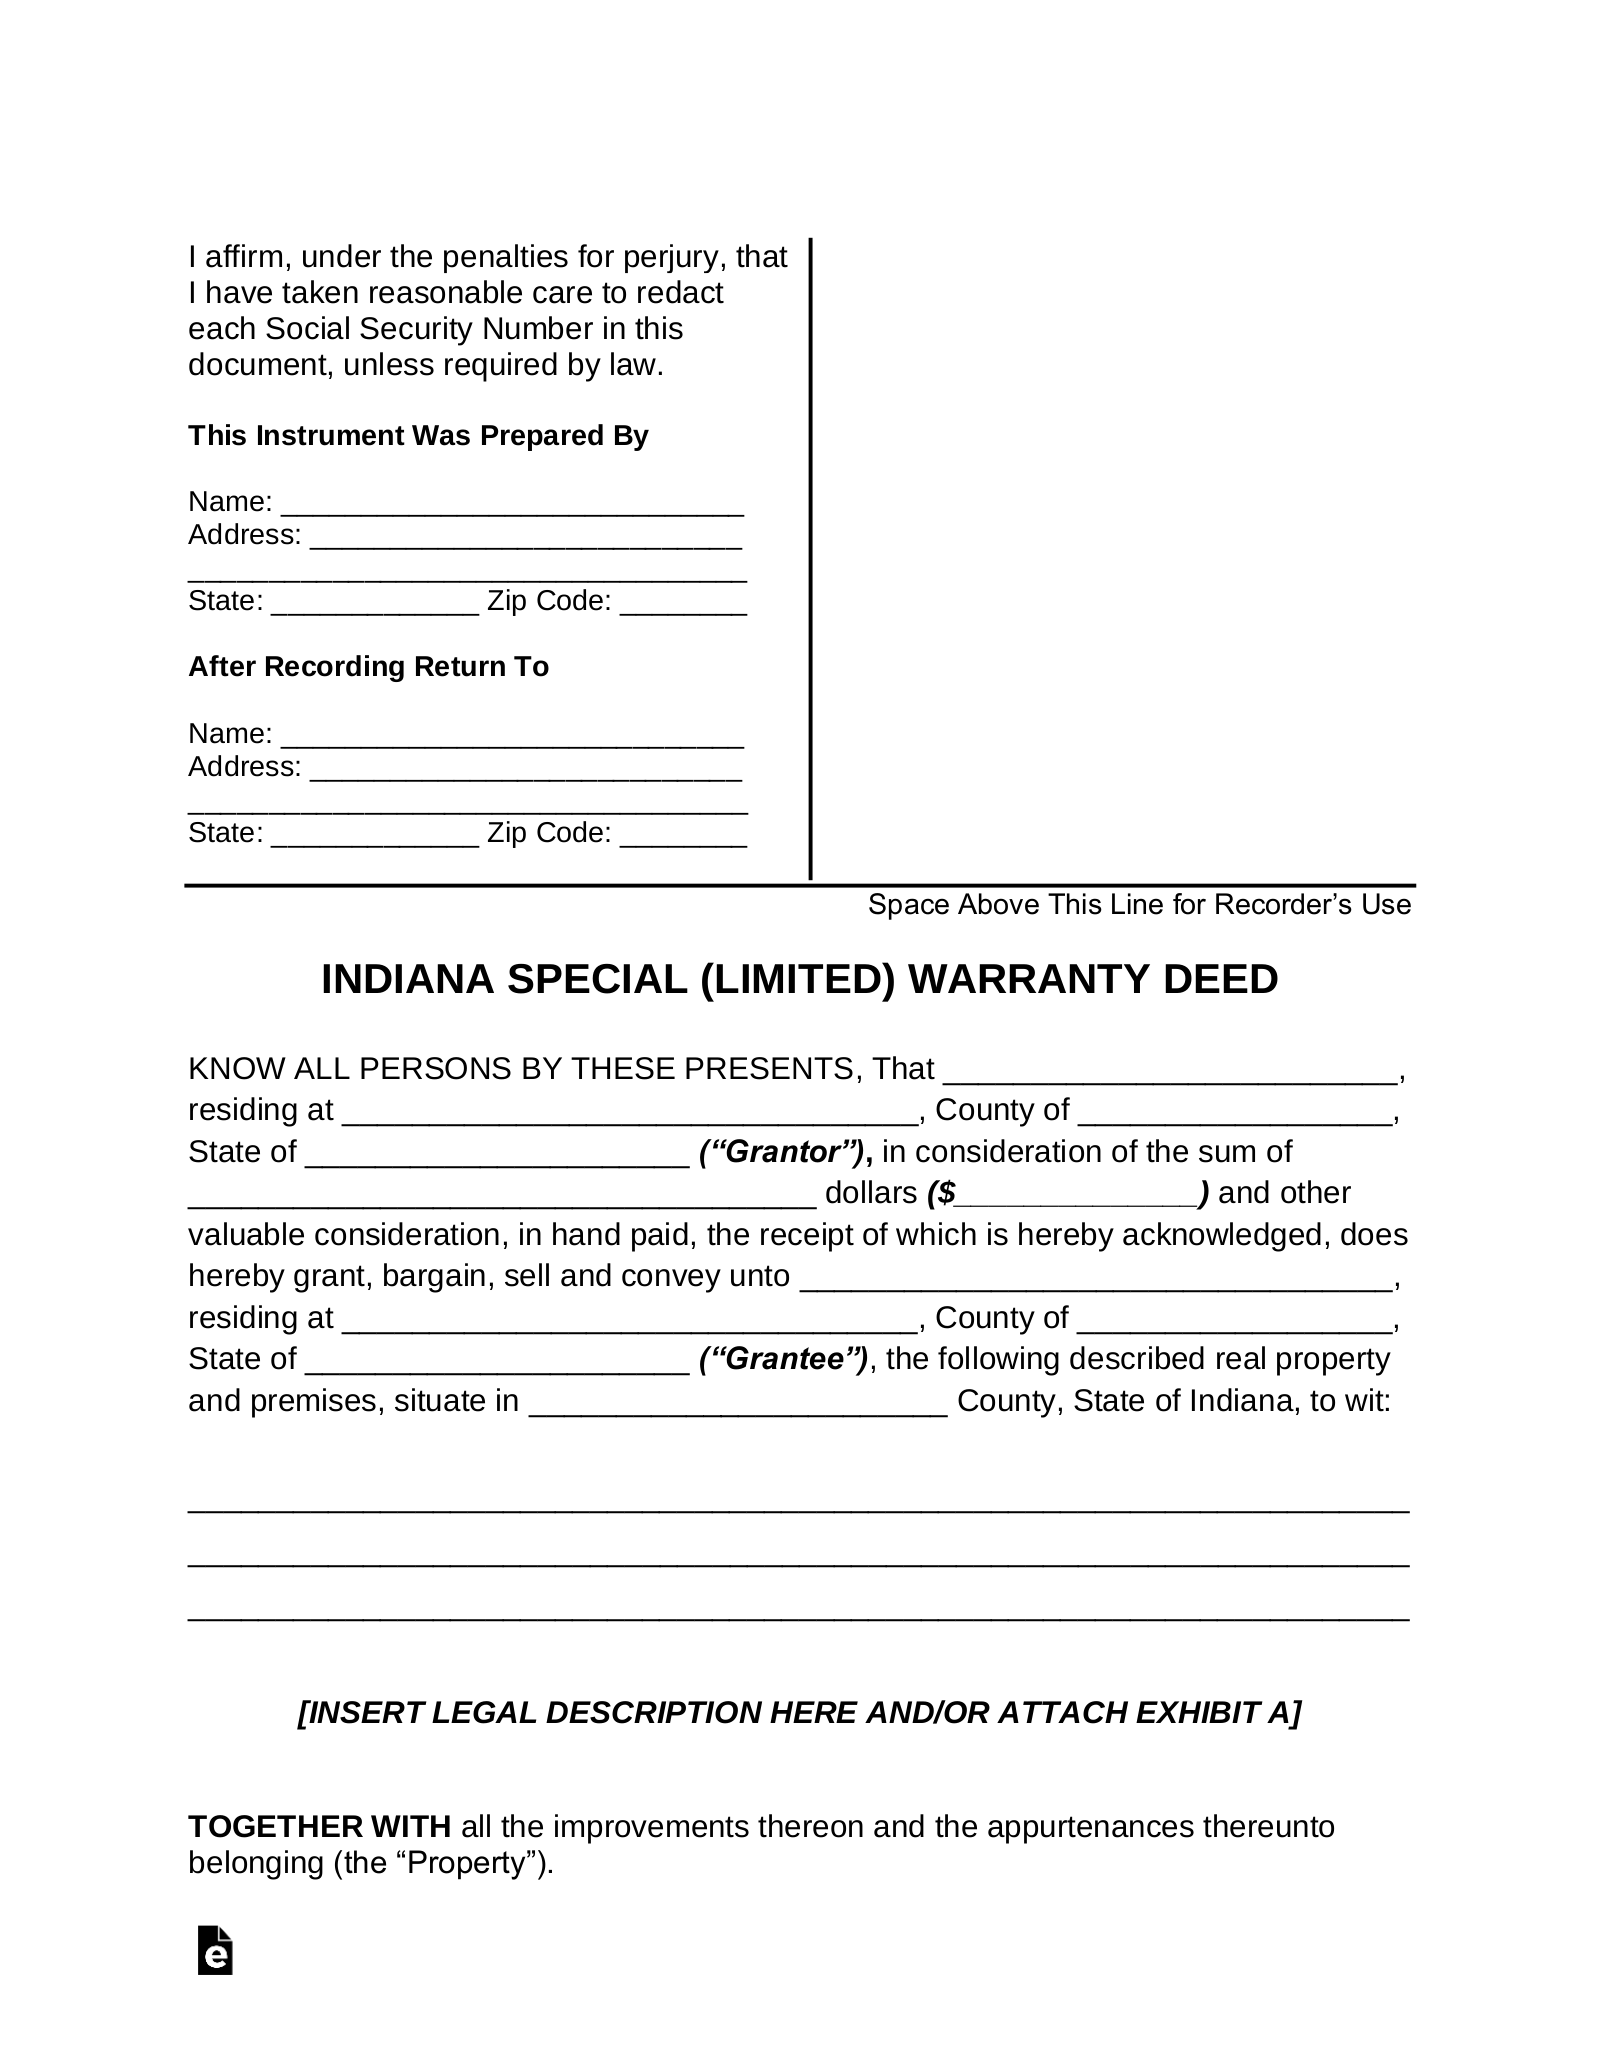 Indiana Special Warranty Deed Form